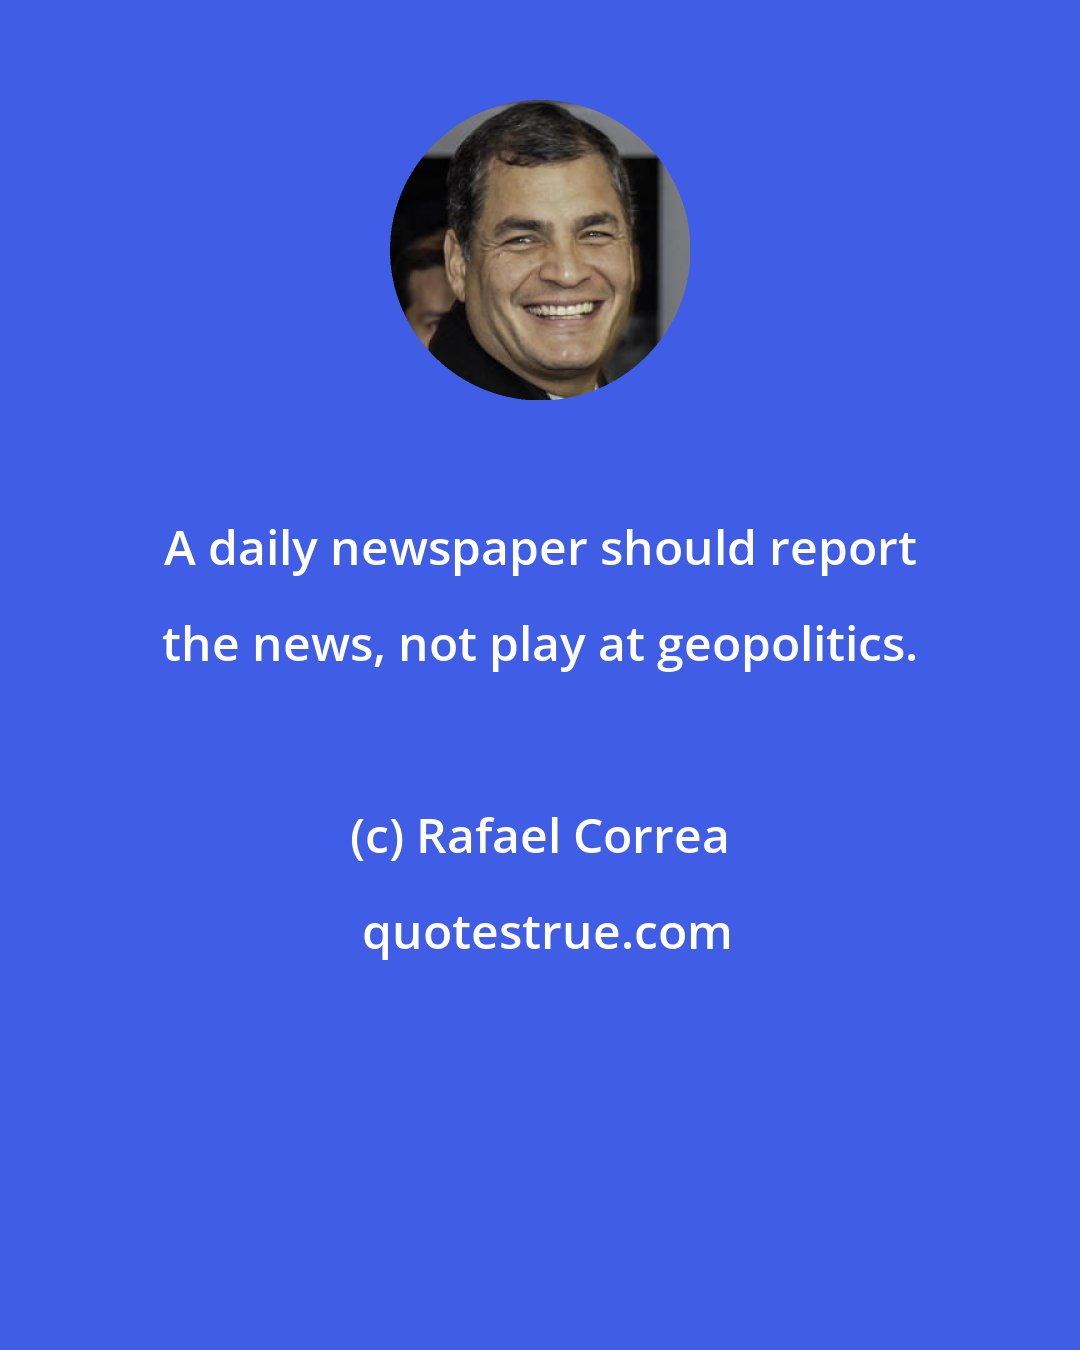 Rafael Correa: A daily newspaper should report the news, not play at geopolitics.